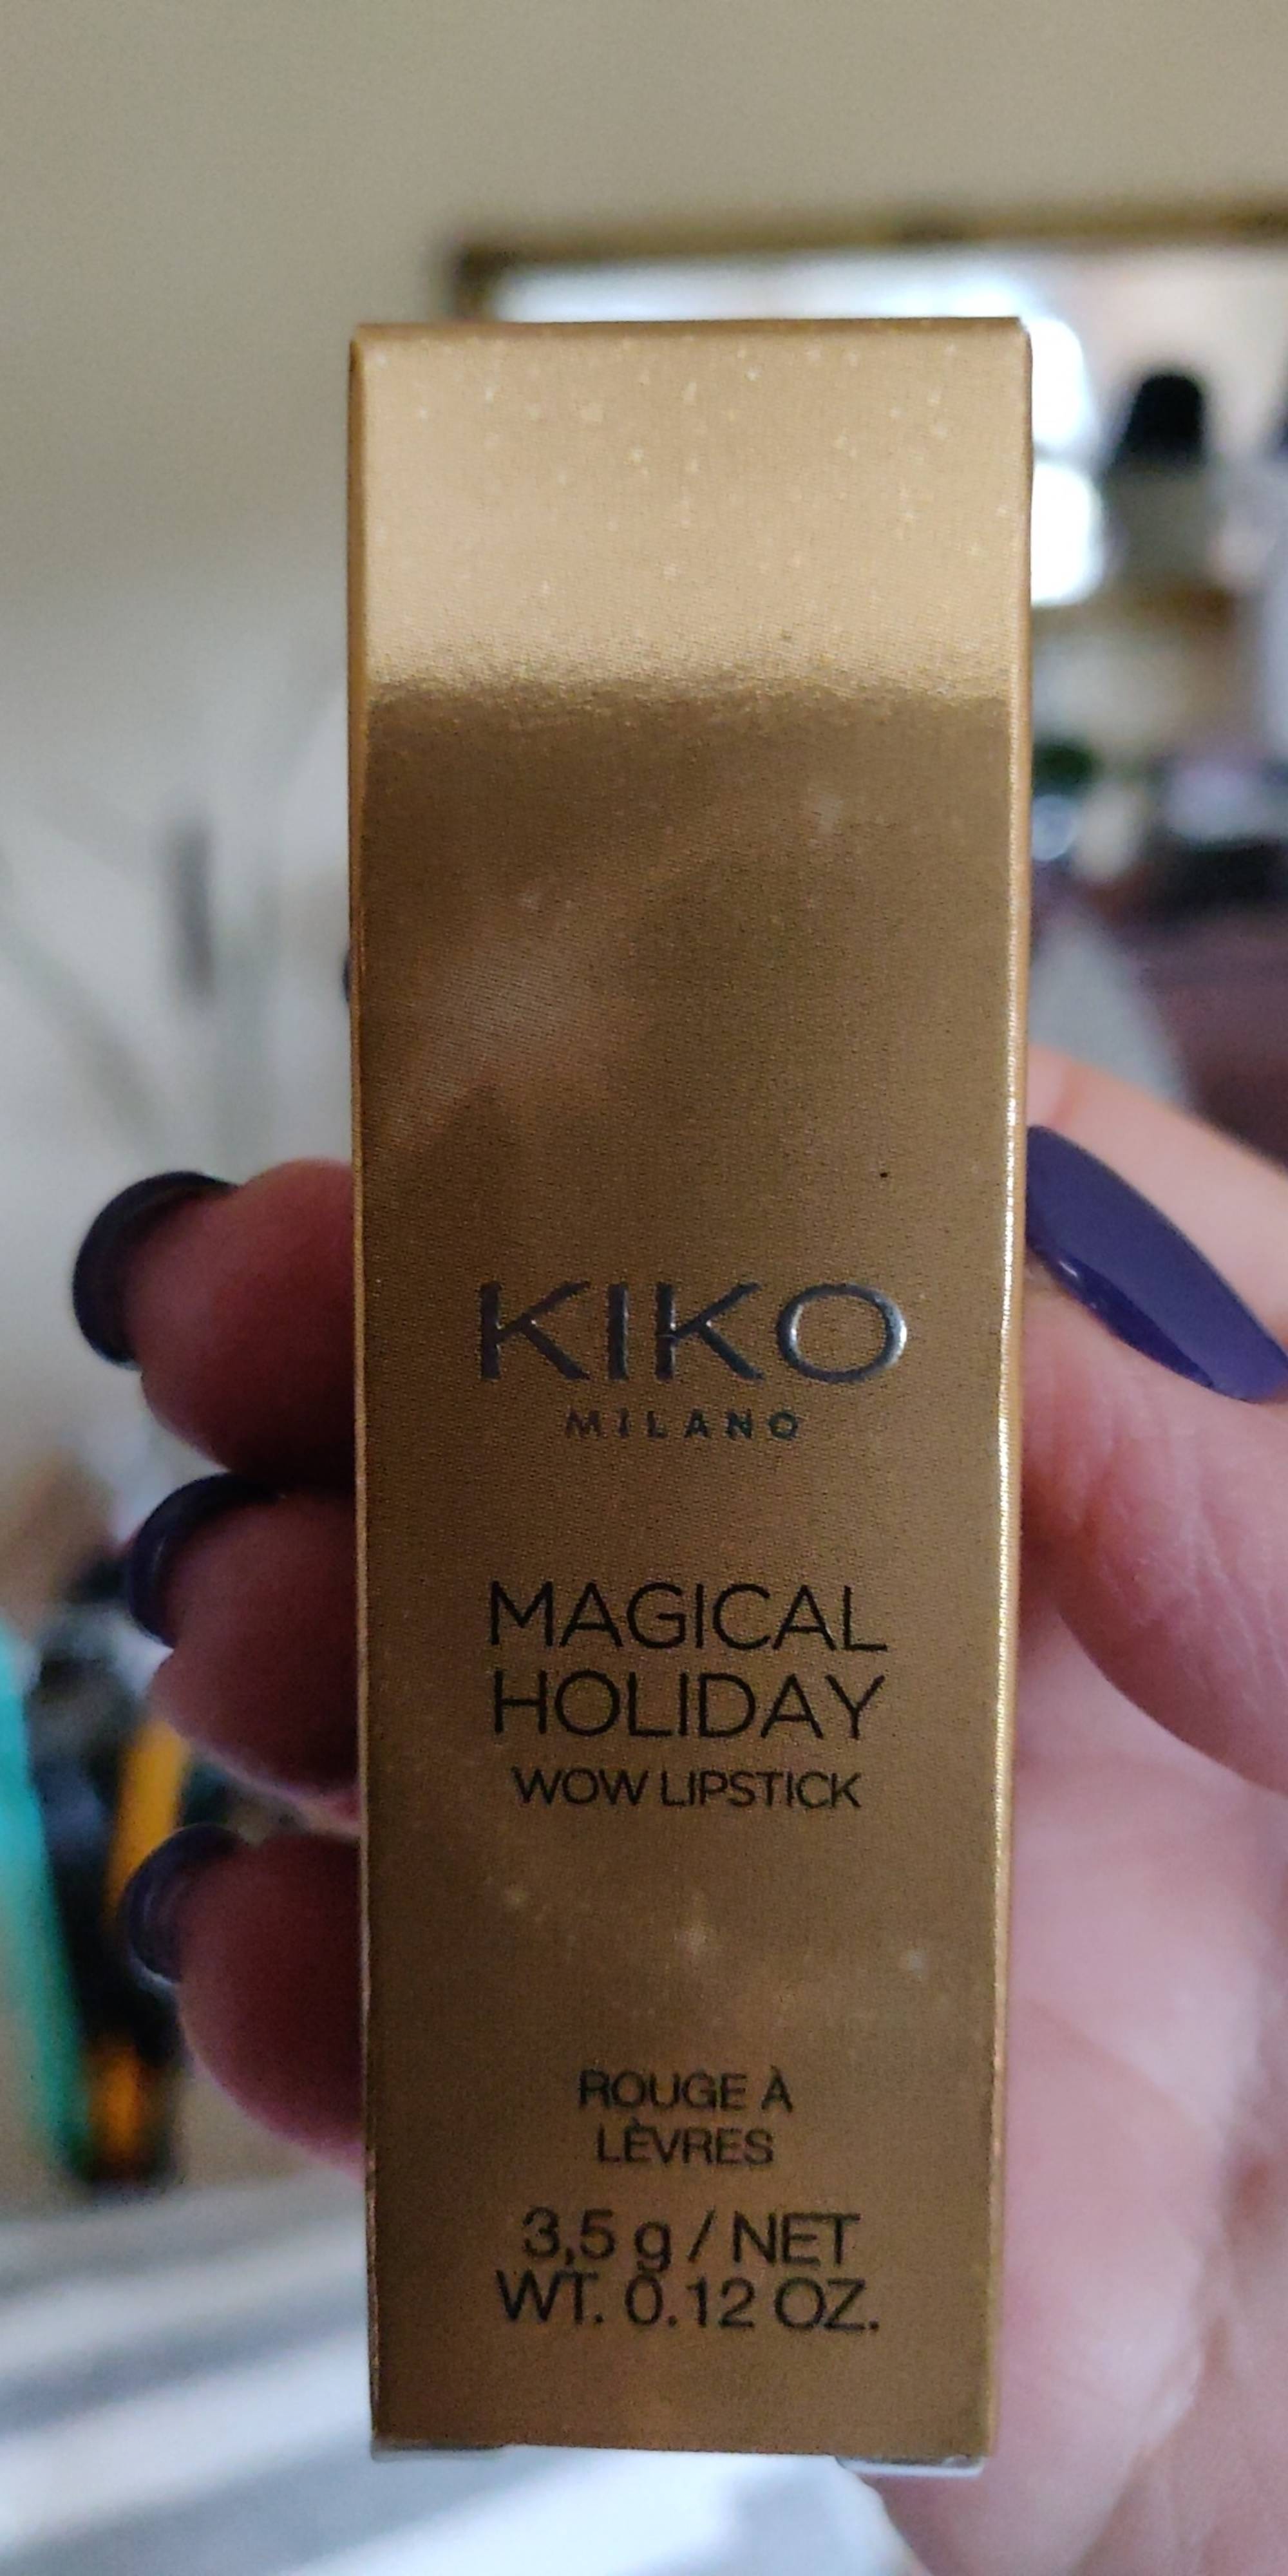 KIKO - Magical holiday wow lipstick - Rouge à lèvres